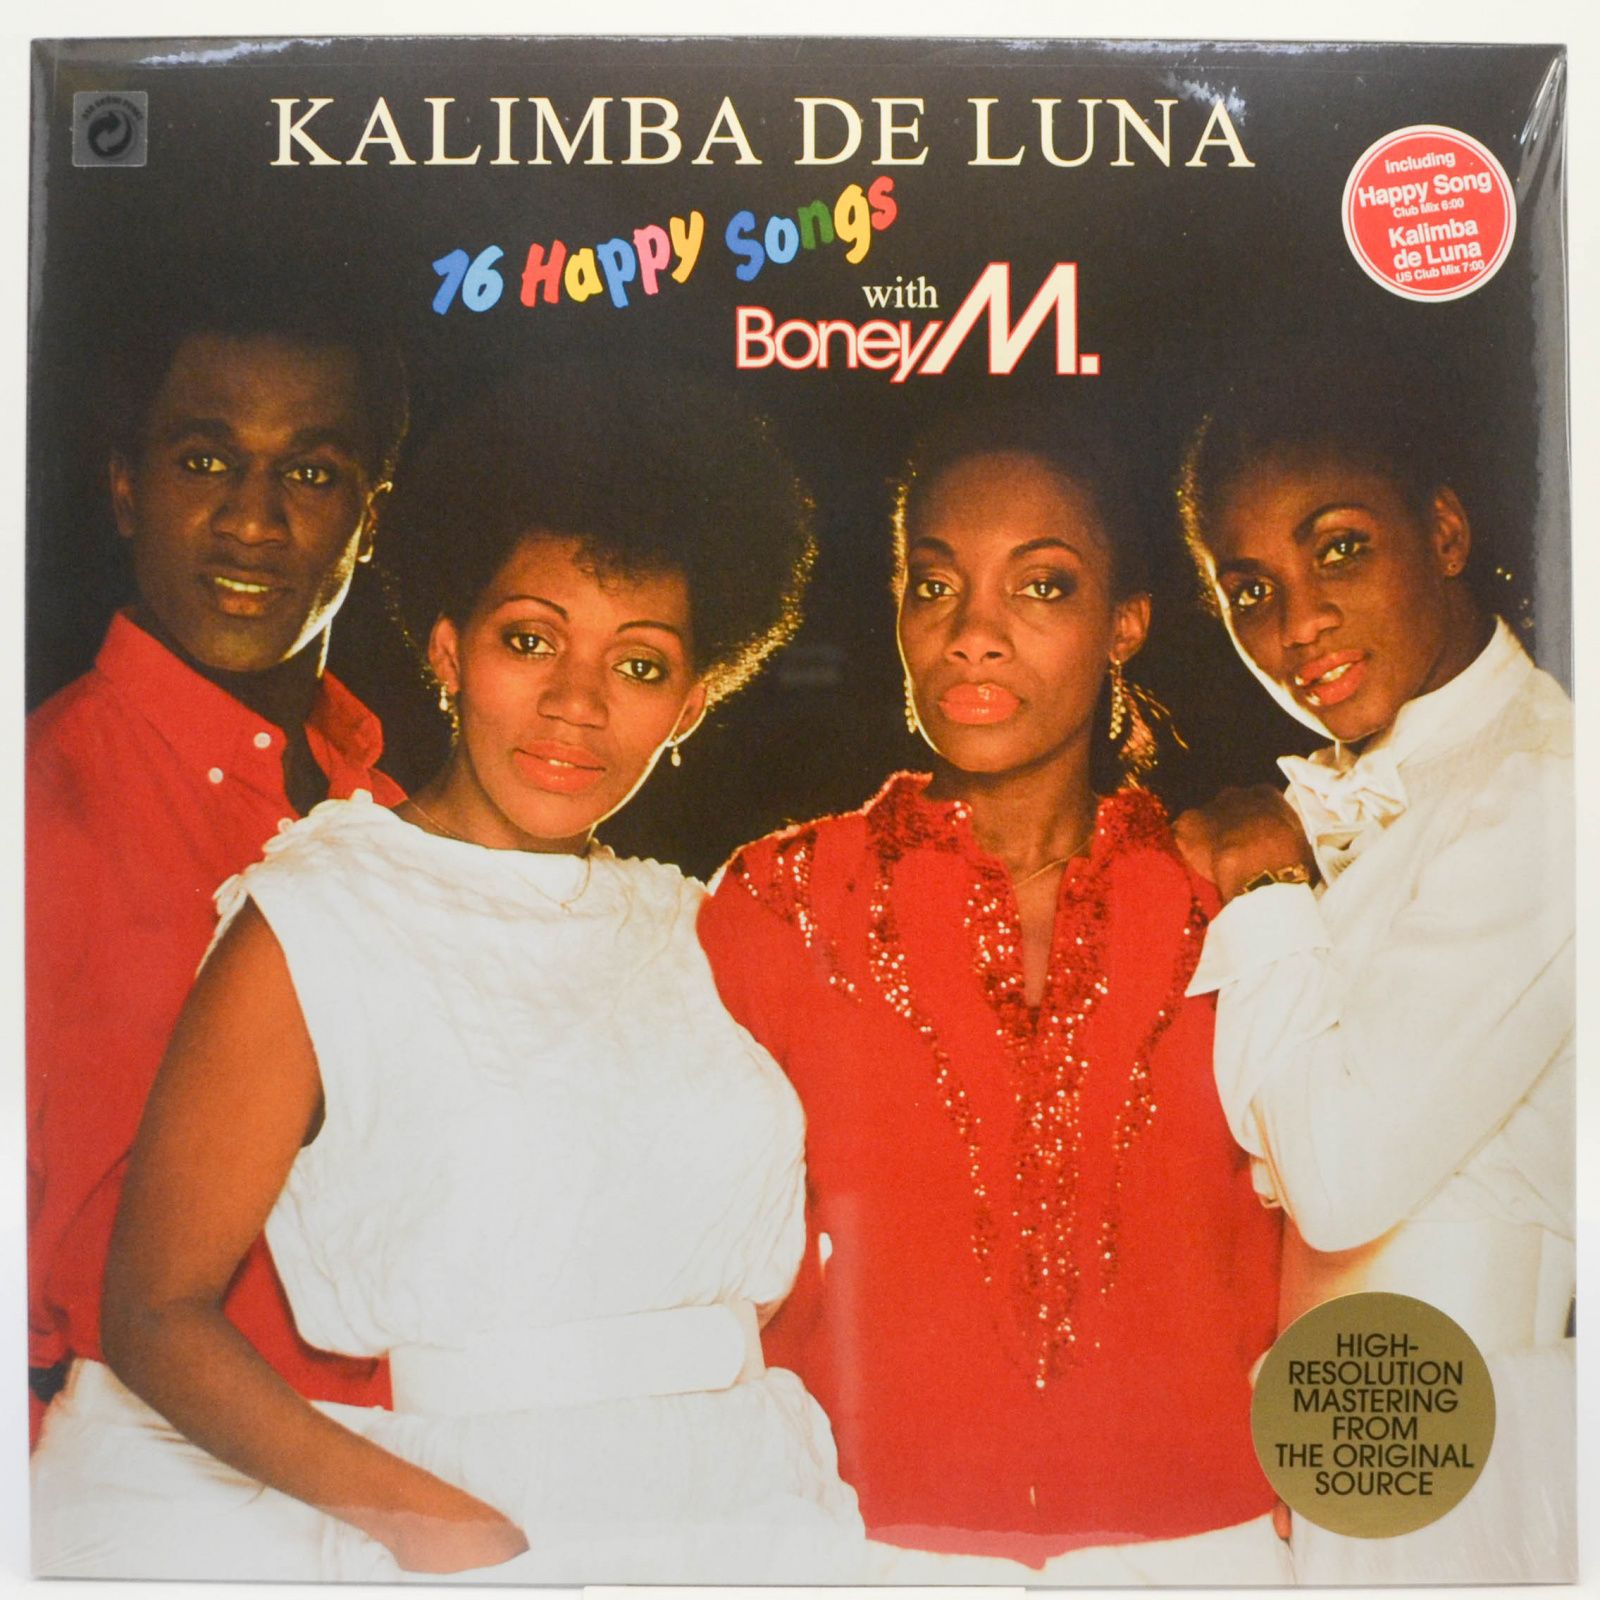 Boney M. — Kalimba De Luna (16 Happy Songs), 2017